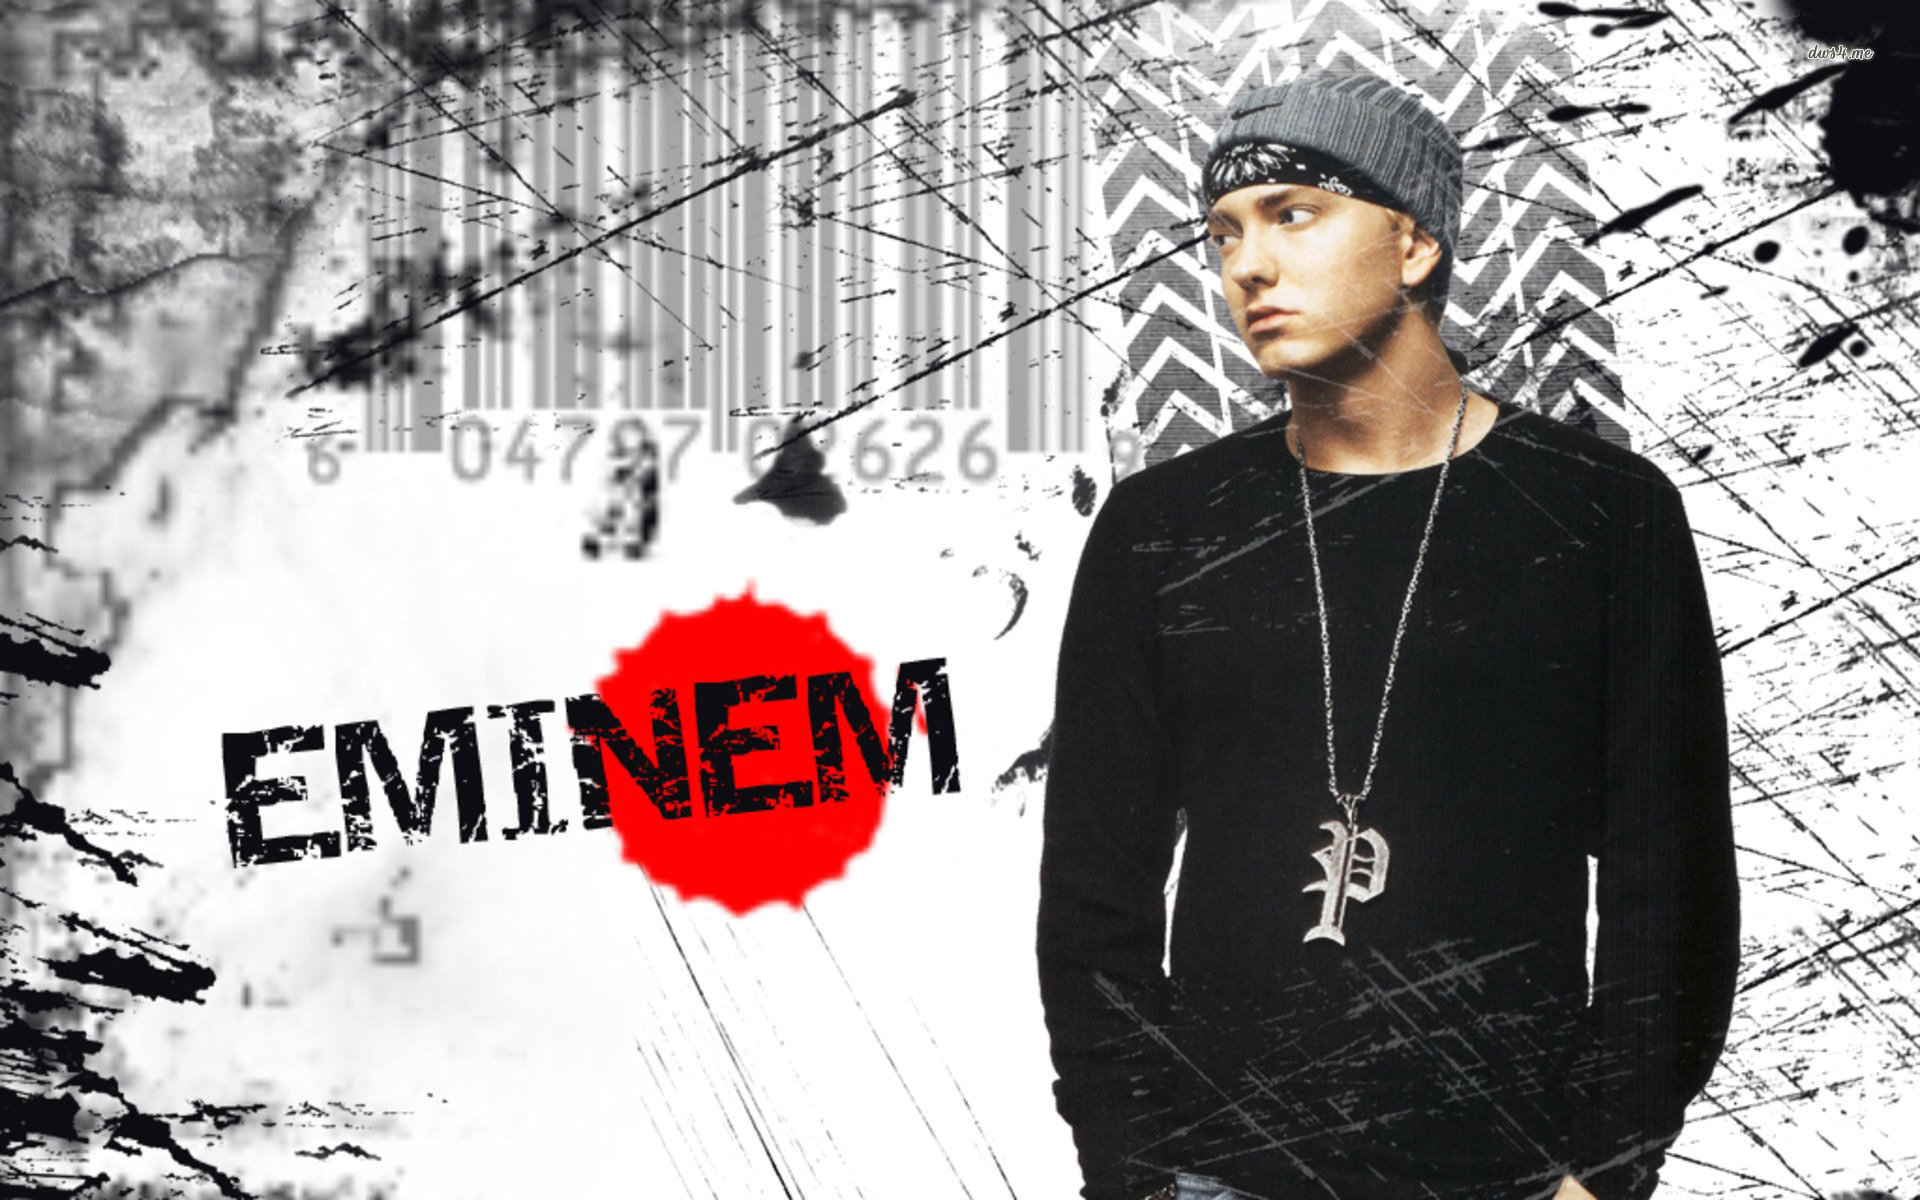 Eminem Wallpapers HD A17